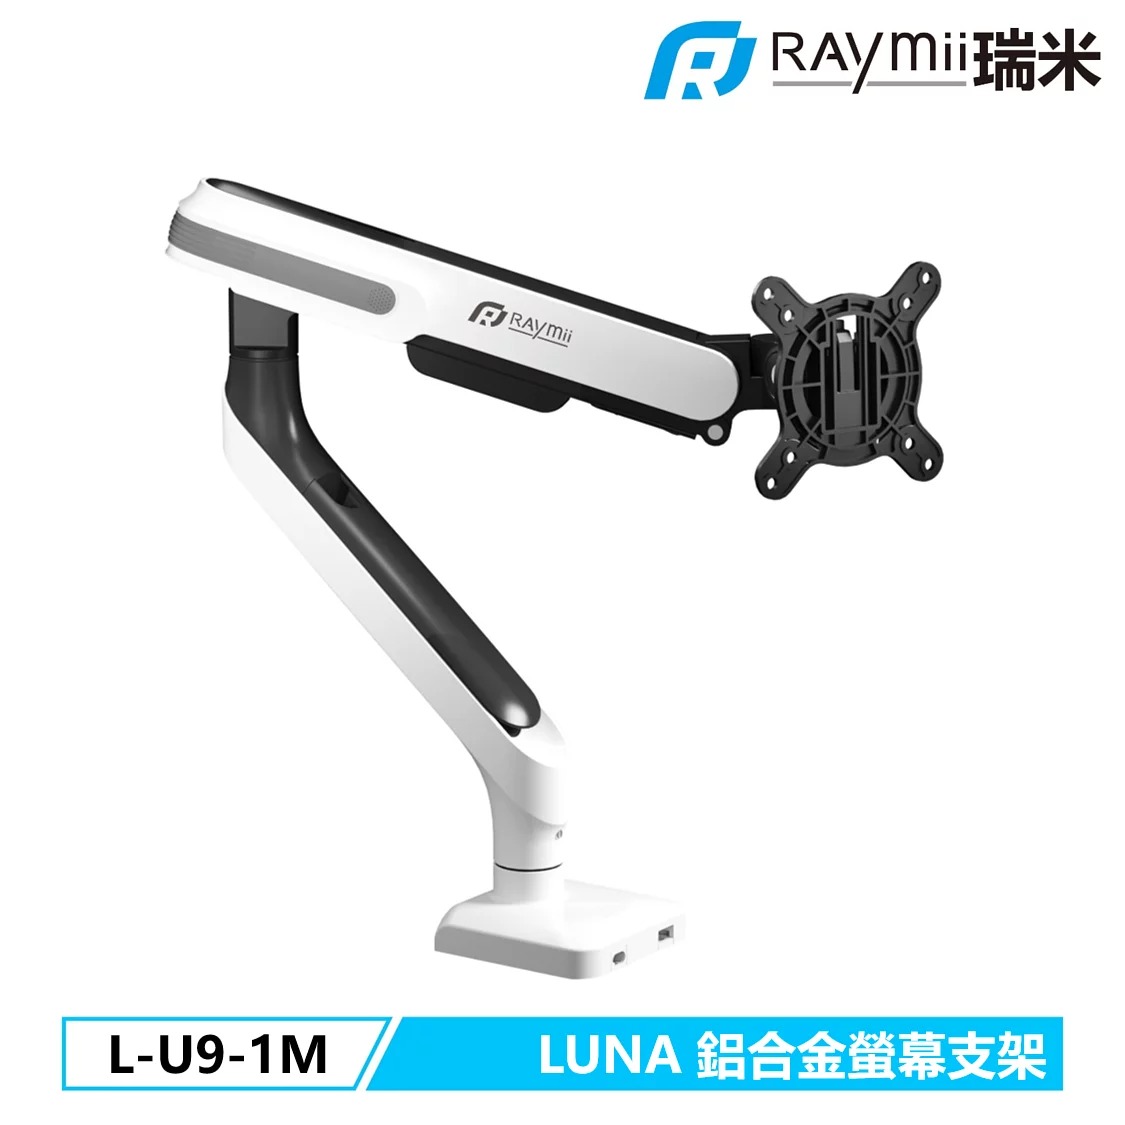 【Raymii 瑞米】L-U9-1M 鋁合金彈簧式雙螢幕支架 - LUNA系列